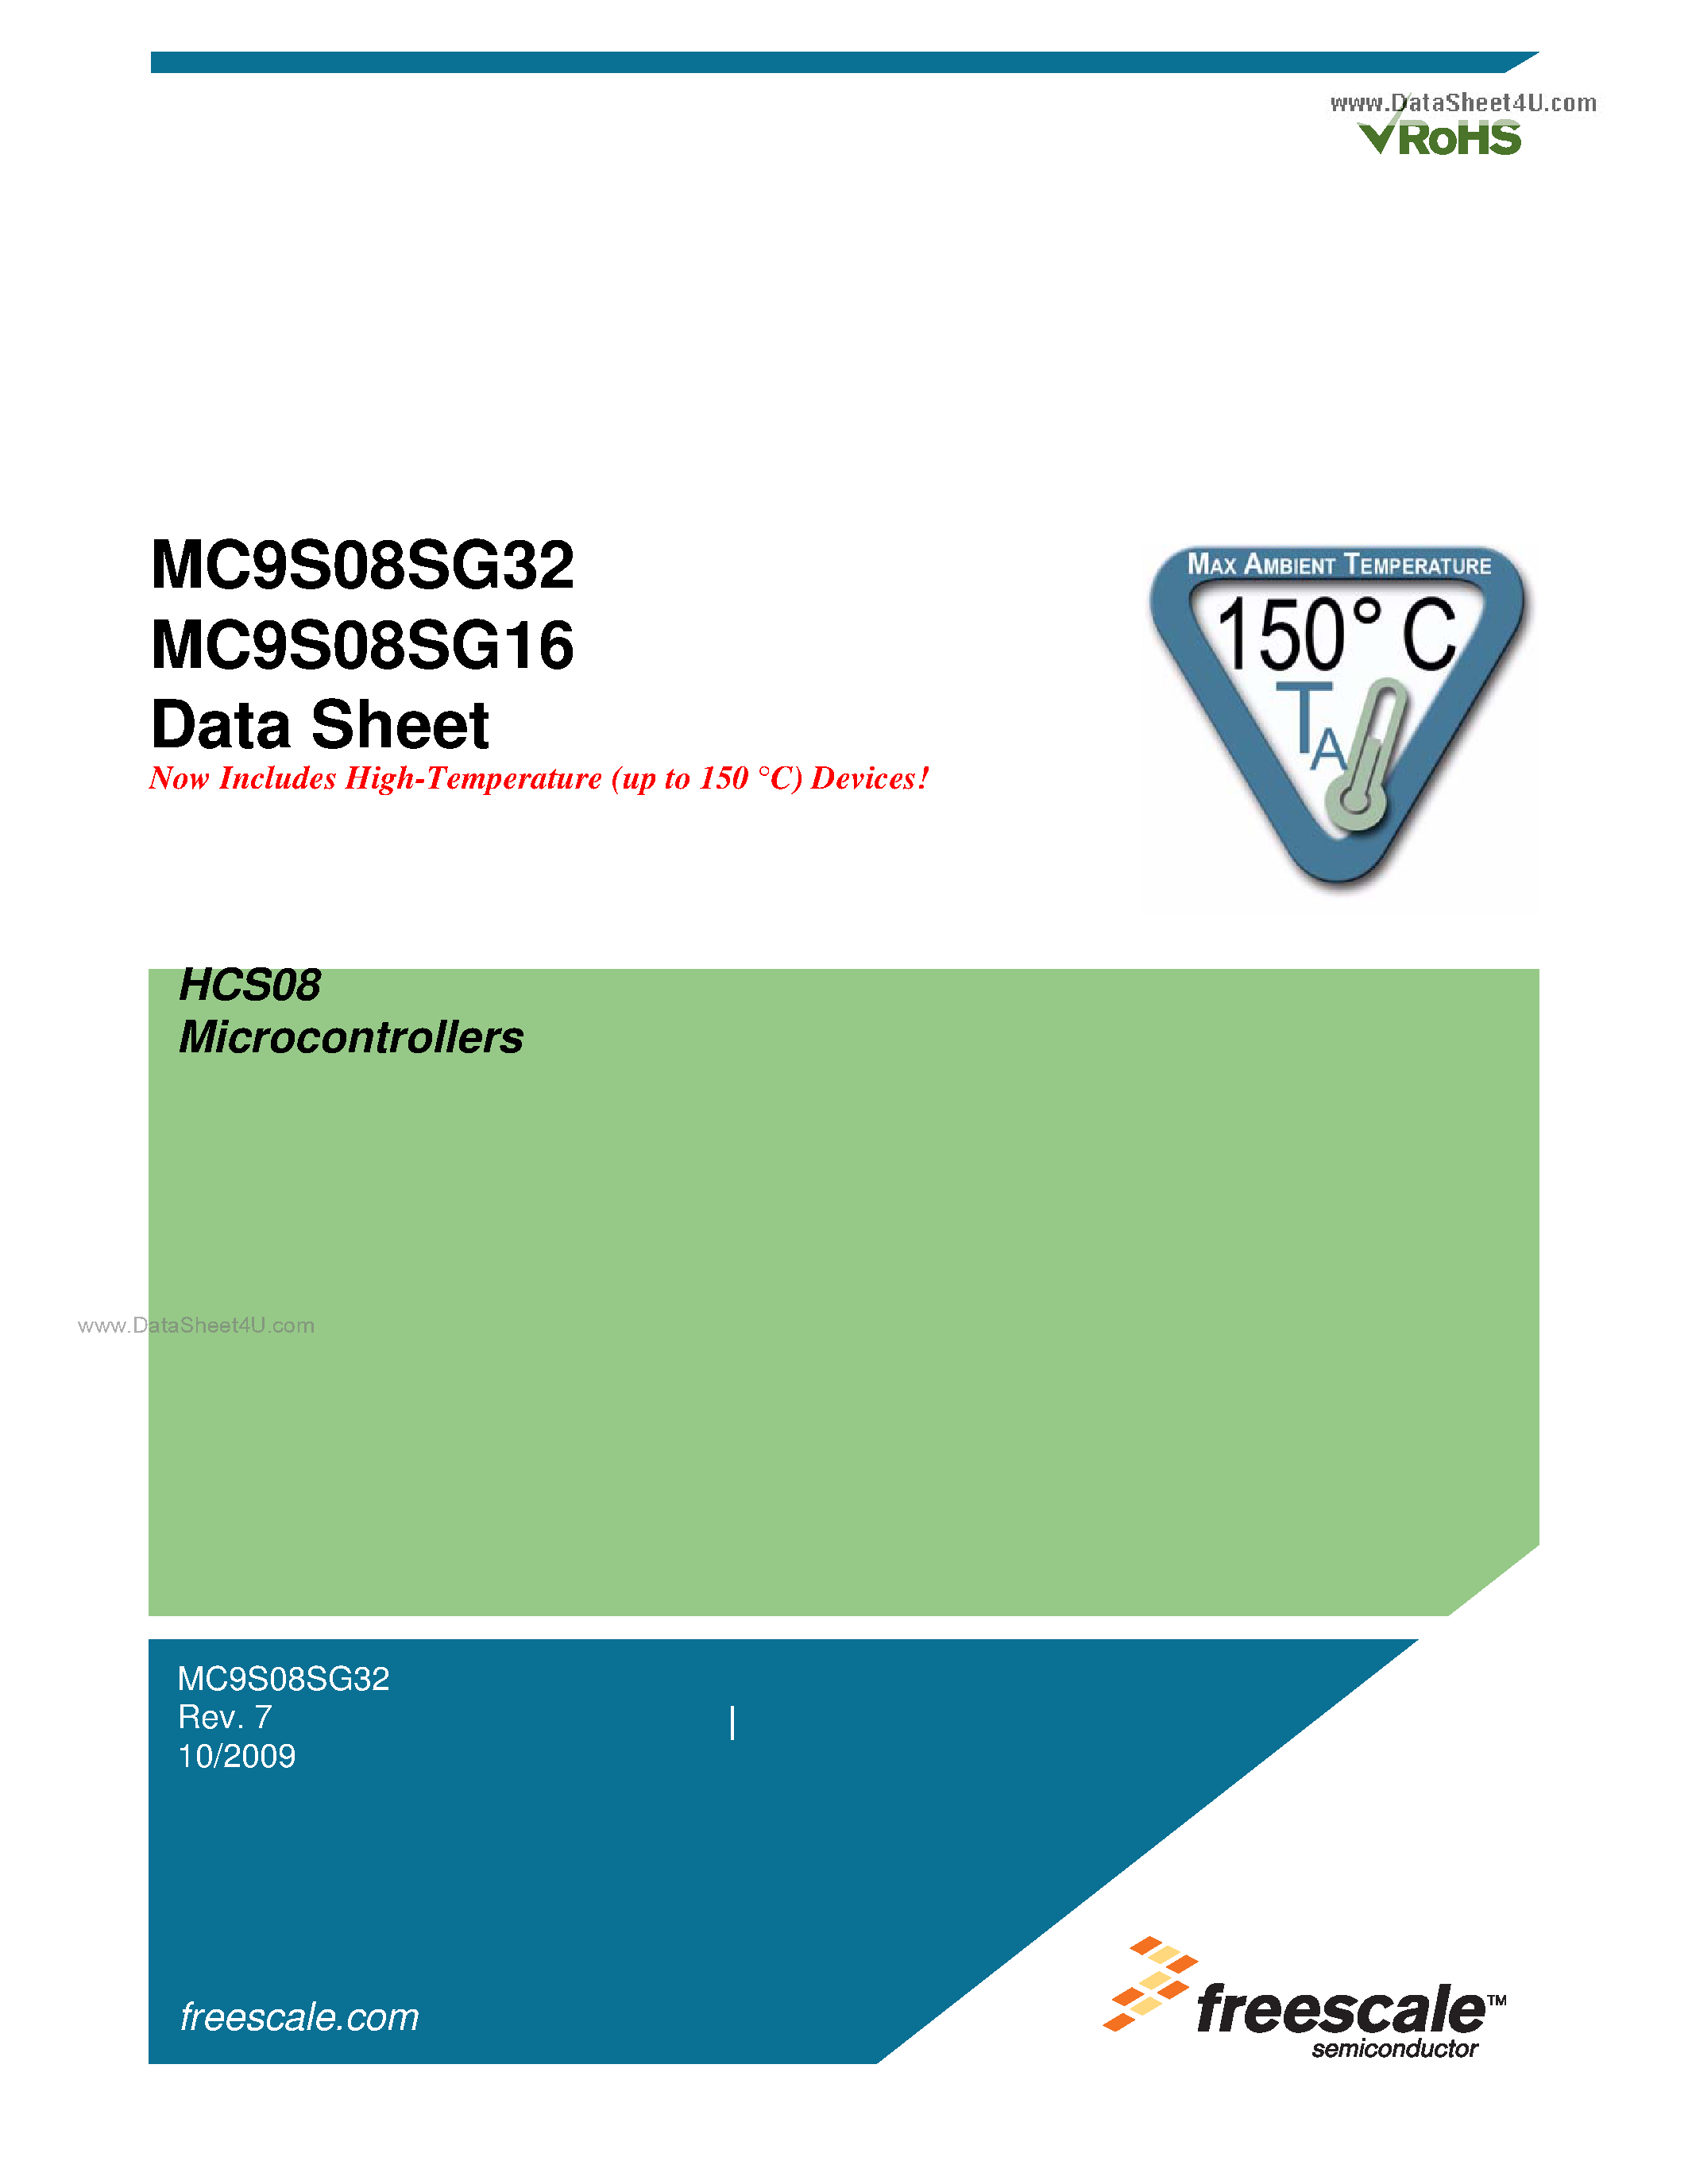 Datasheet MC9S08SG16 - (MC9S08SG16 / MC9S08SG32) HCS08 Microcontrollers page 1